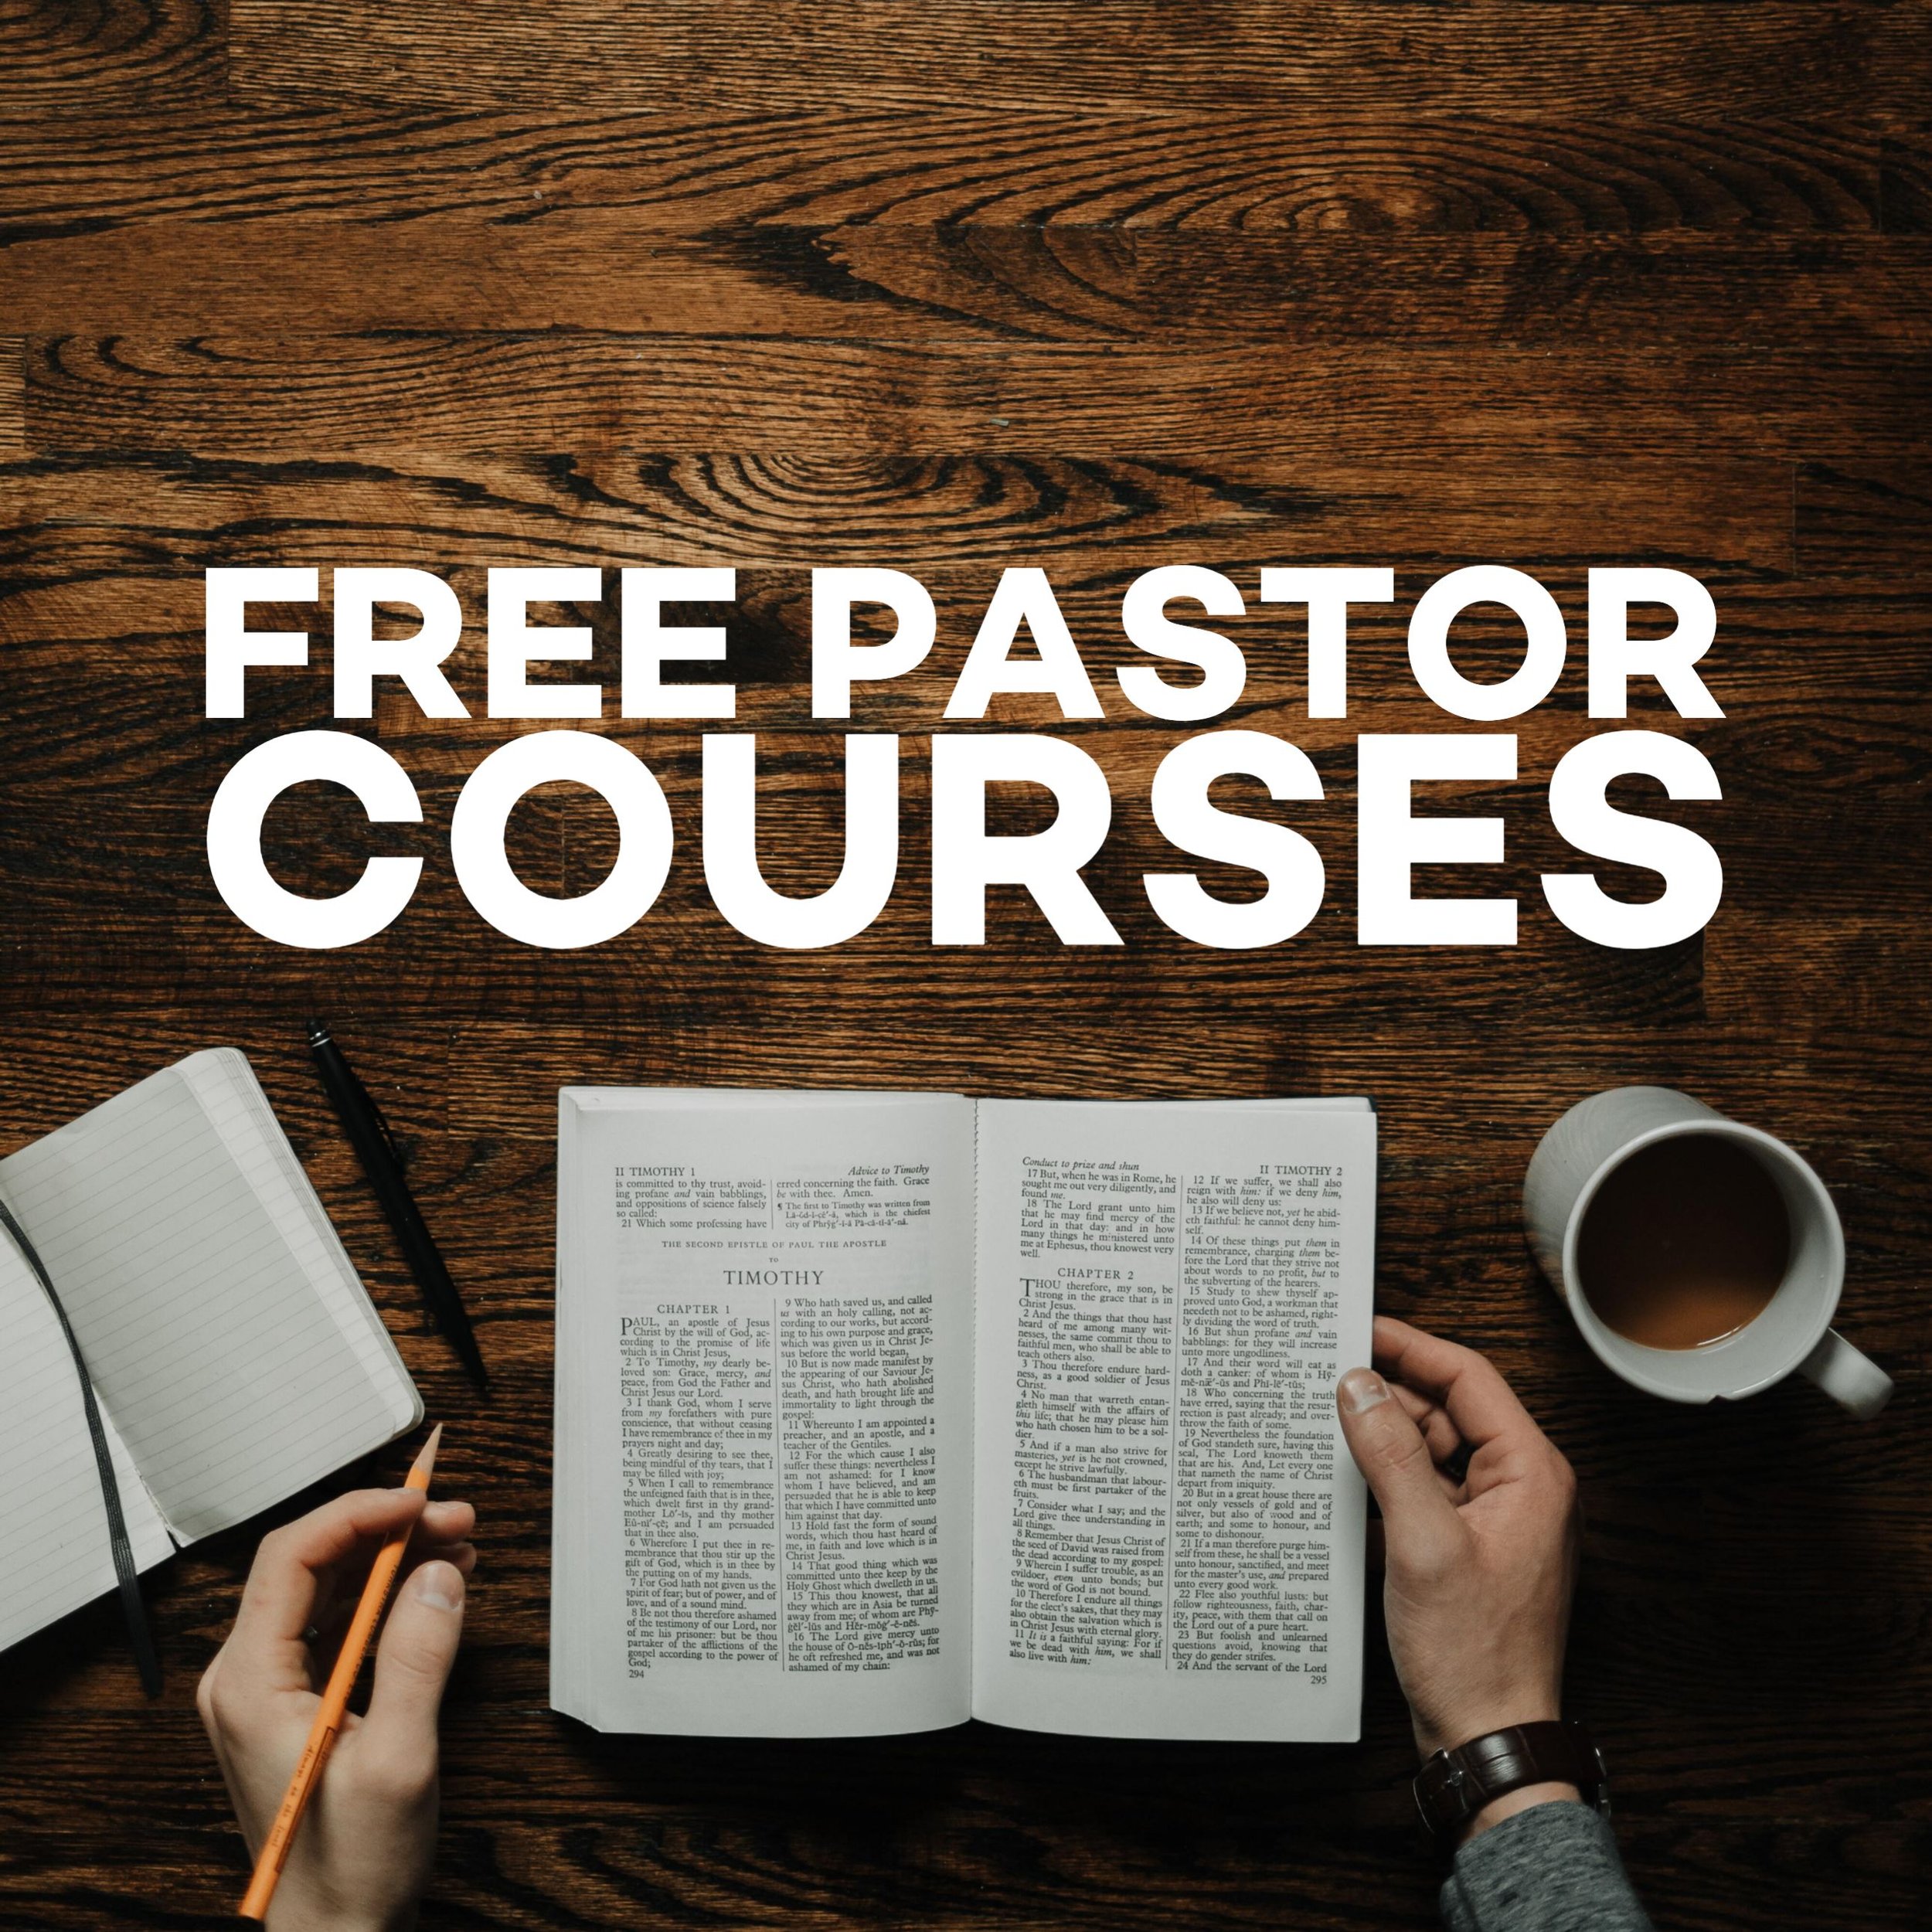 Free Pastor Courses.jpeg